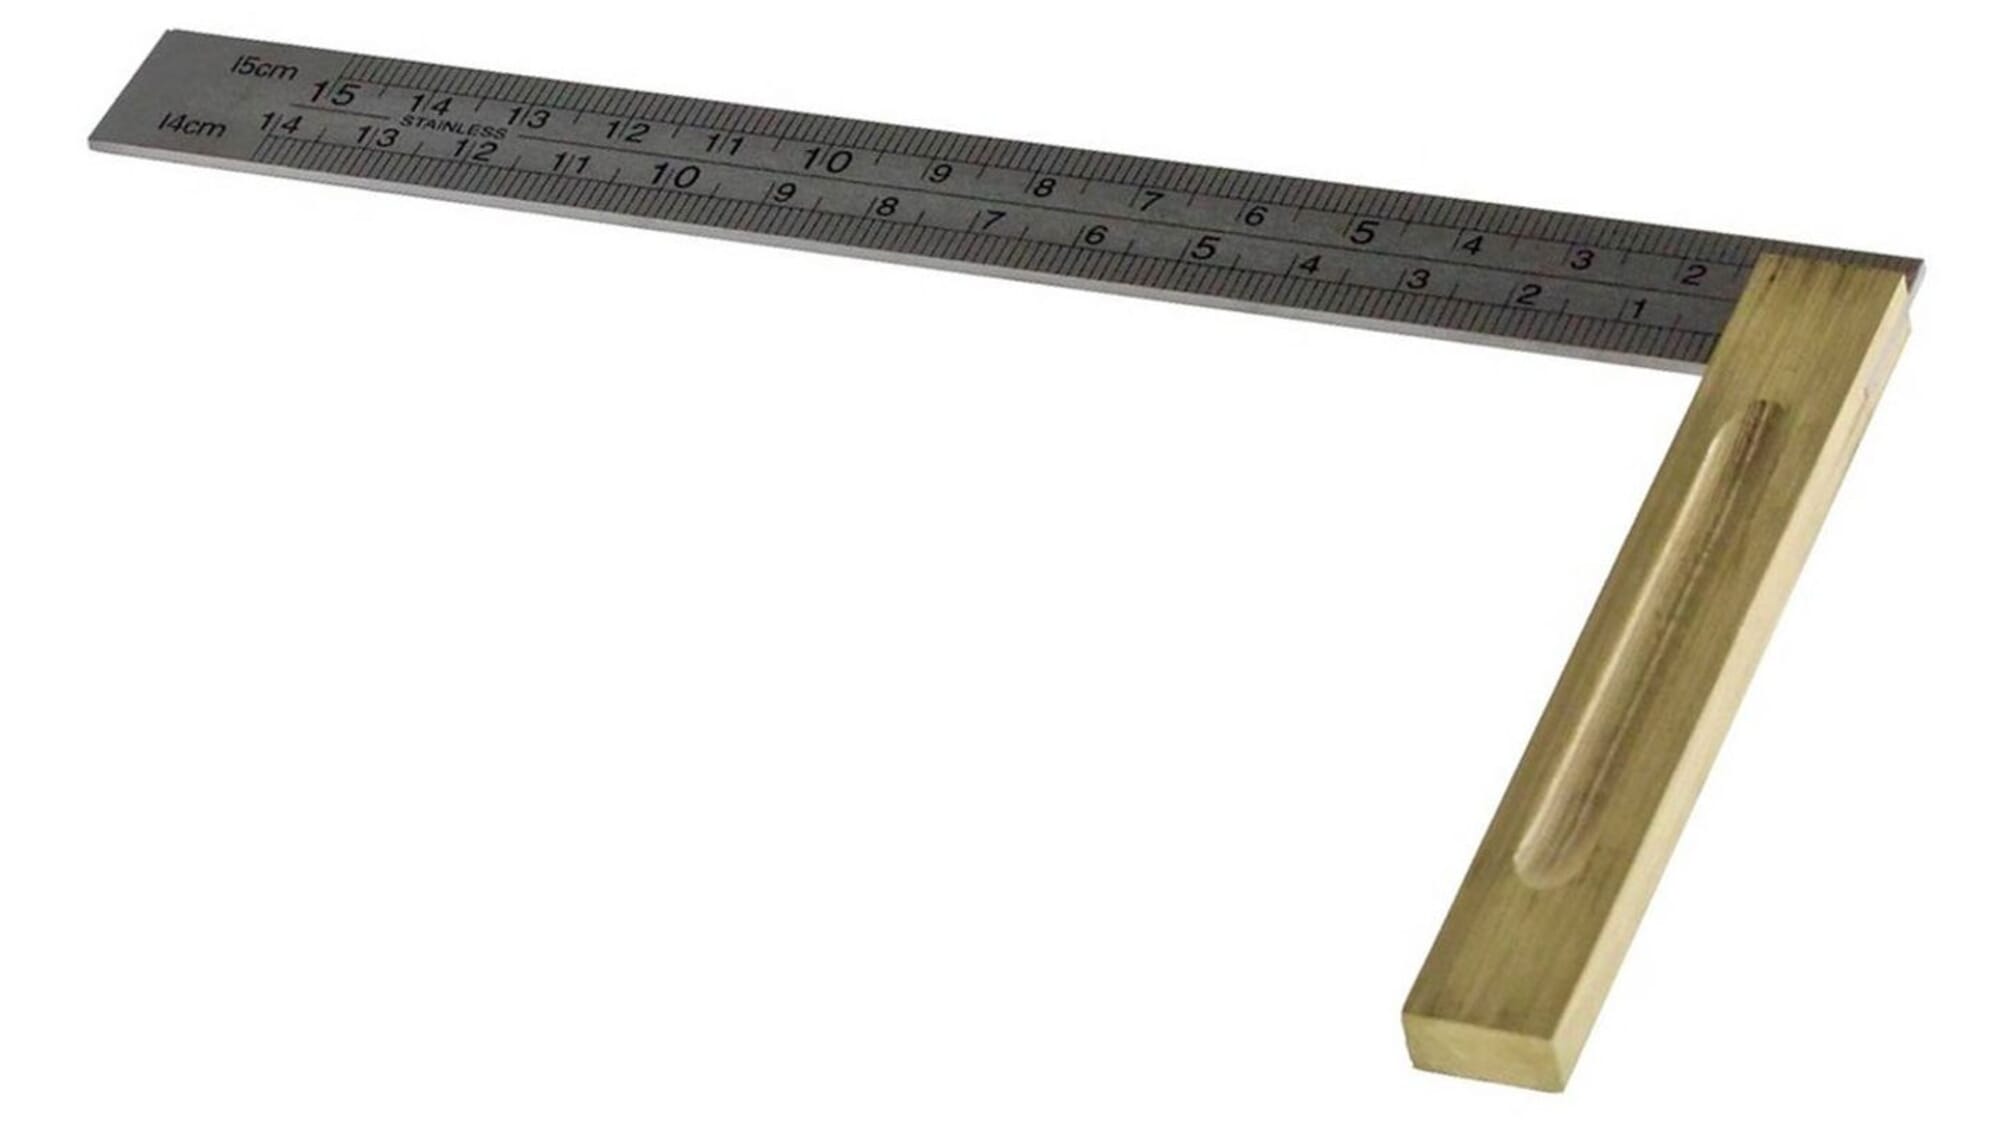 Mini L Square Ruler Stainless Steel Square Measuring Ruler For